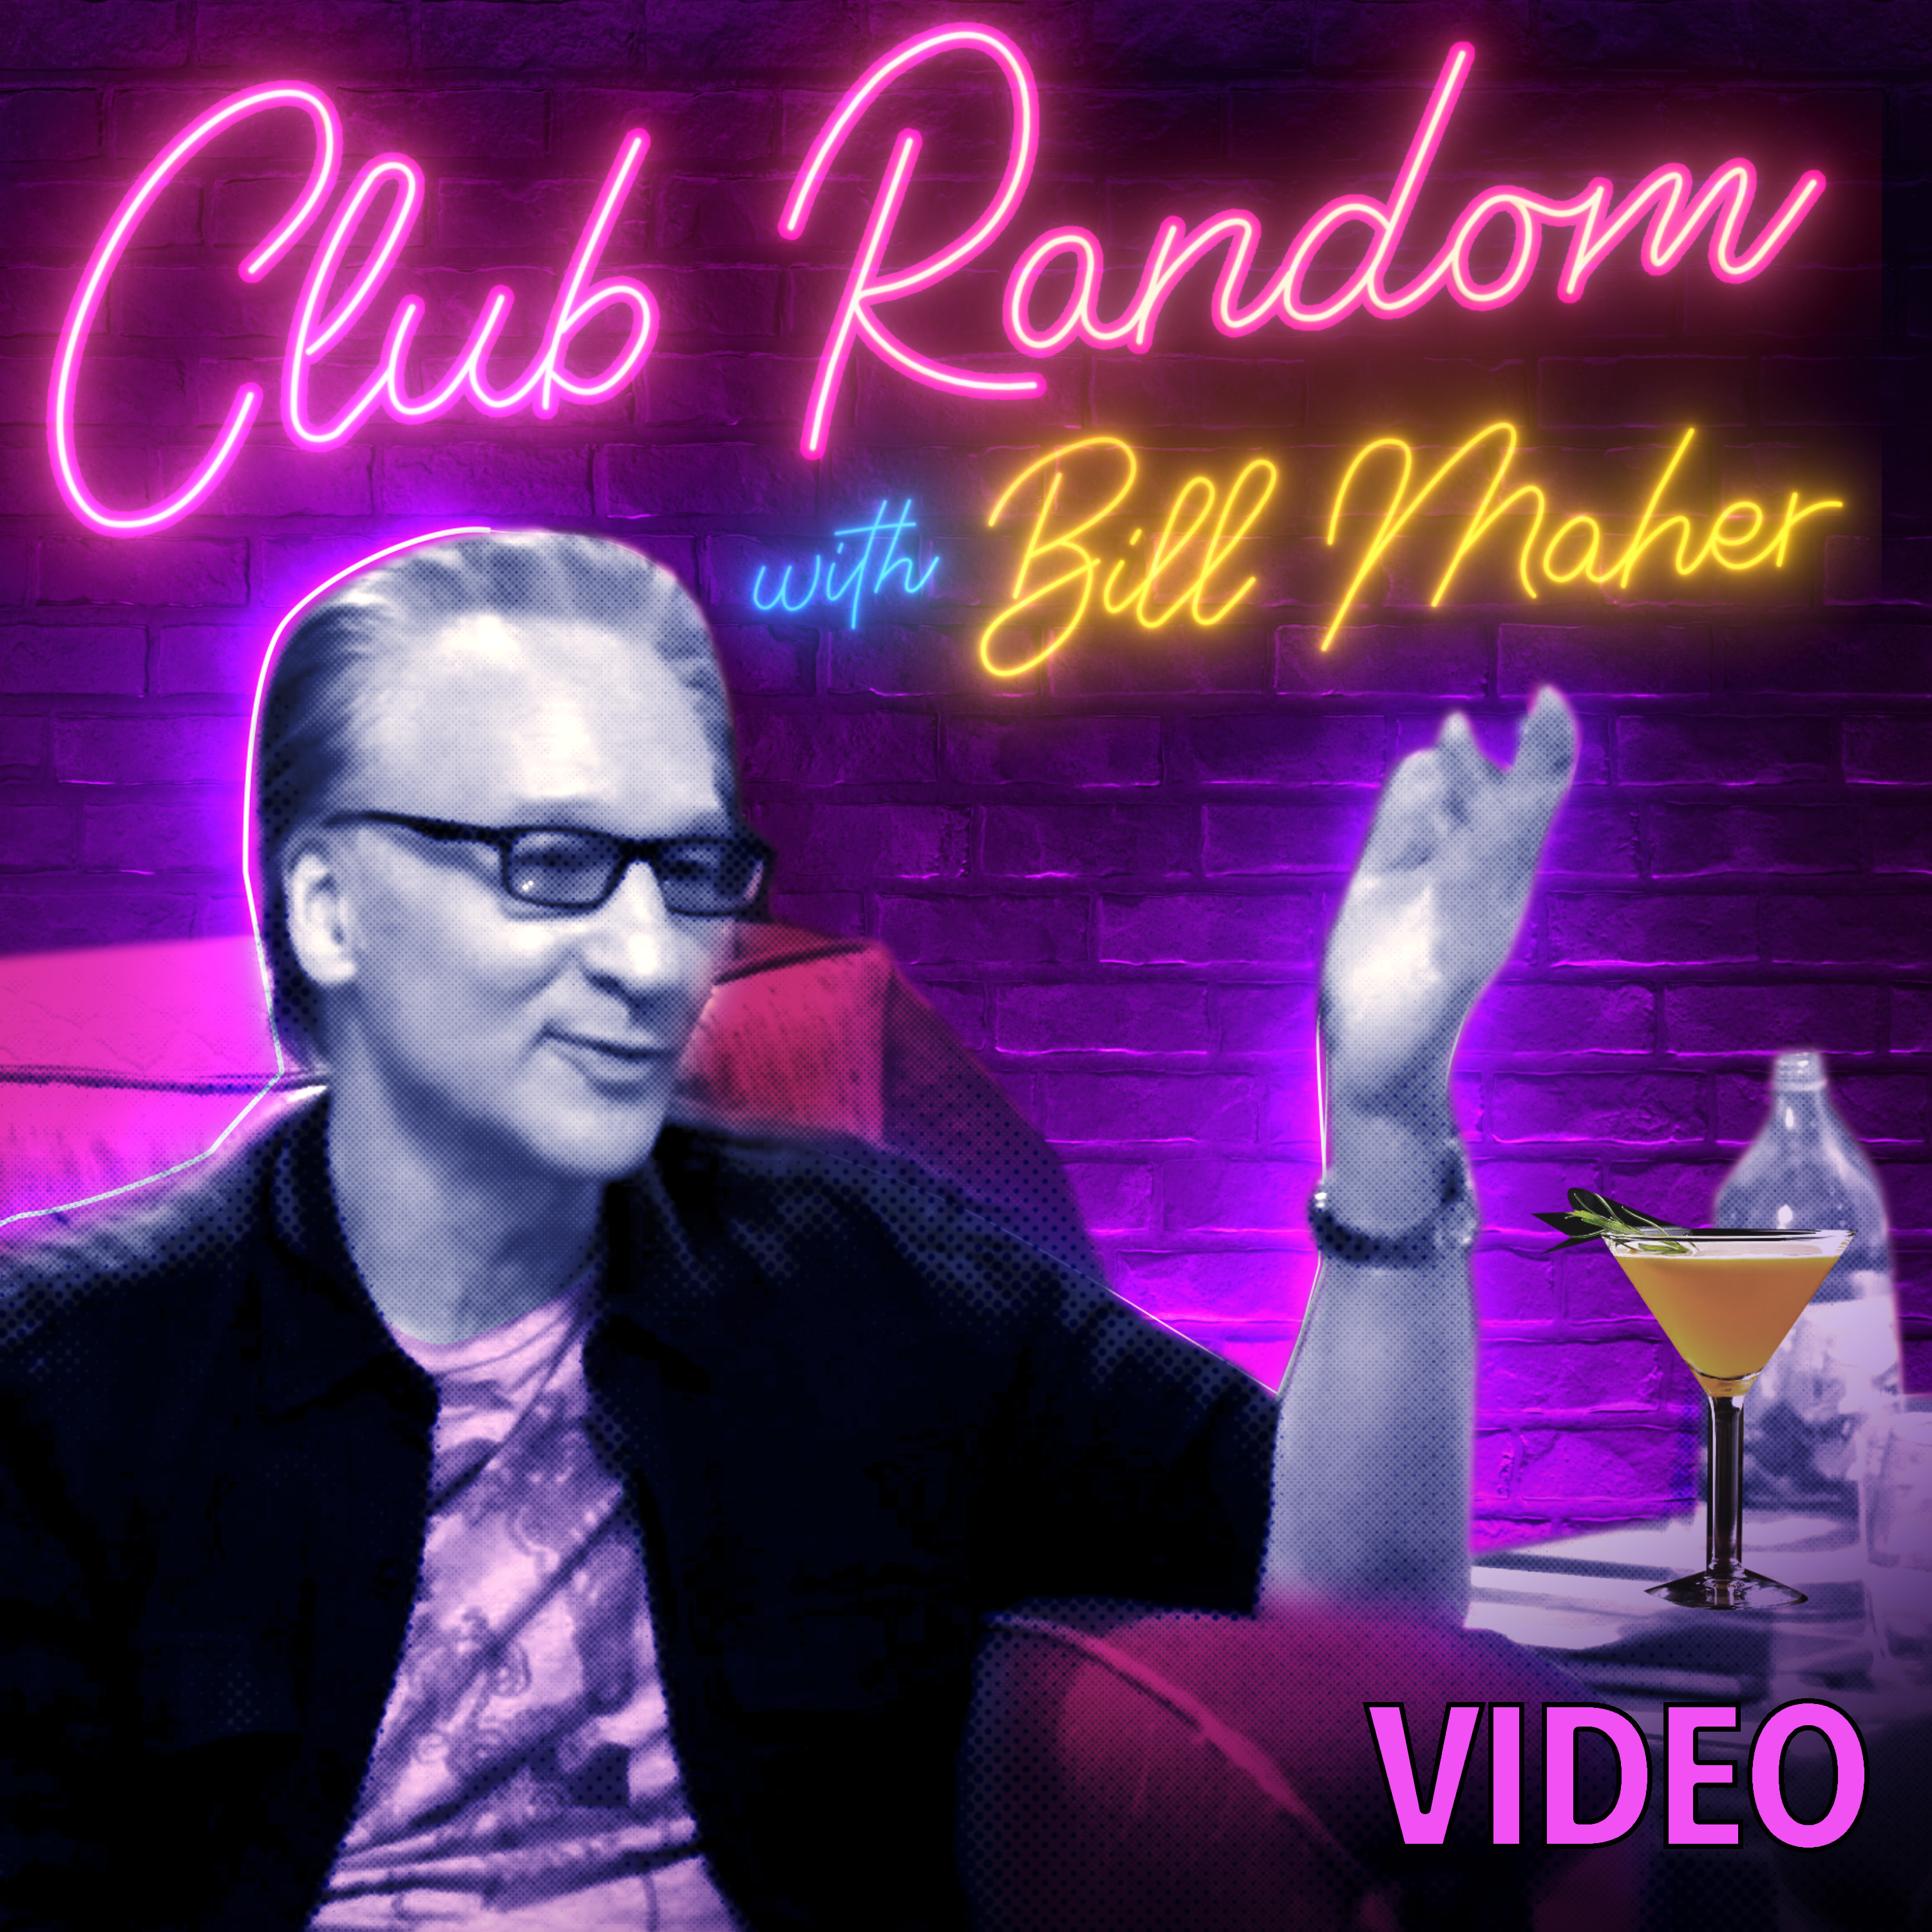 Video: Trace Adkins | Club Random  with Bill Maher